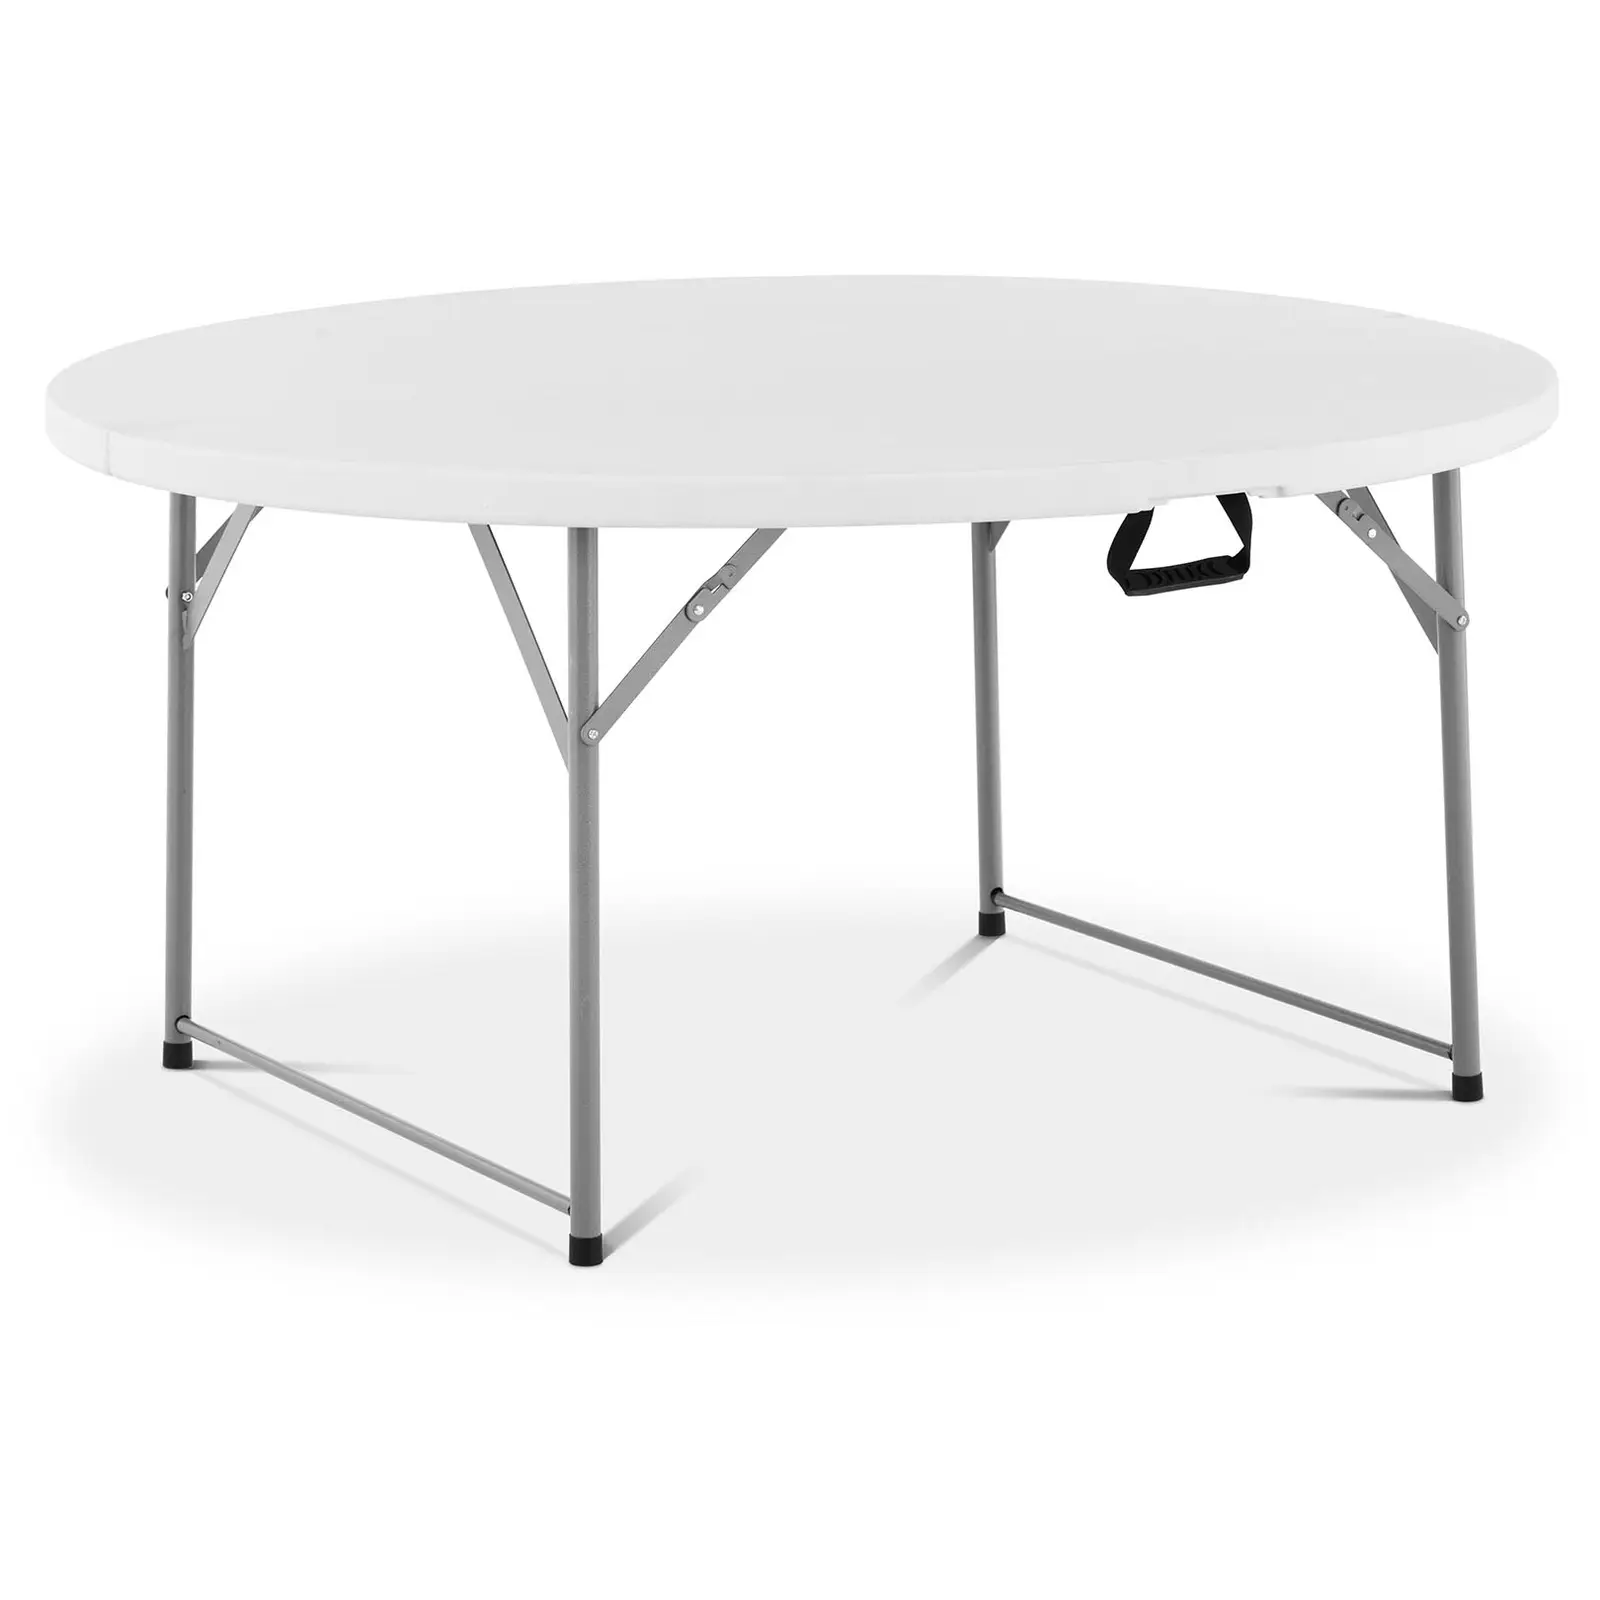 Skládací stůl kulatý Ø 1 500 x 740 mm 150 kg interiér/exteriér bílý - Skládací stoly Royal Catering